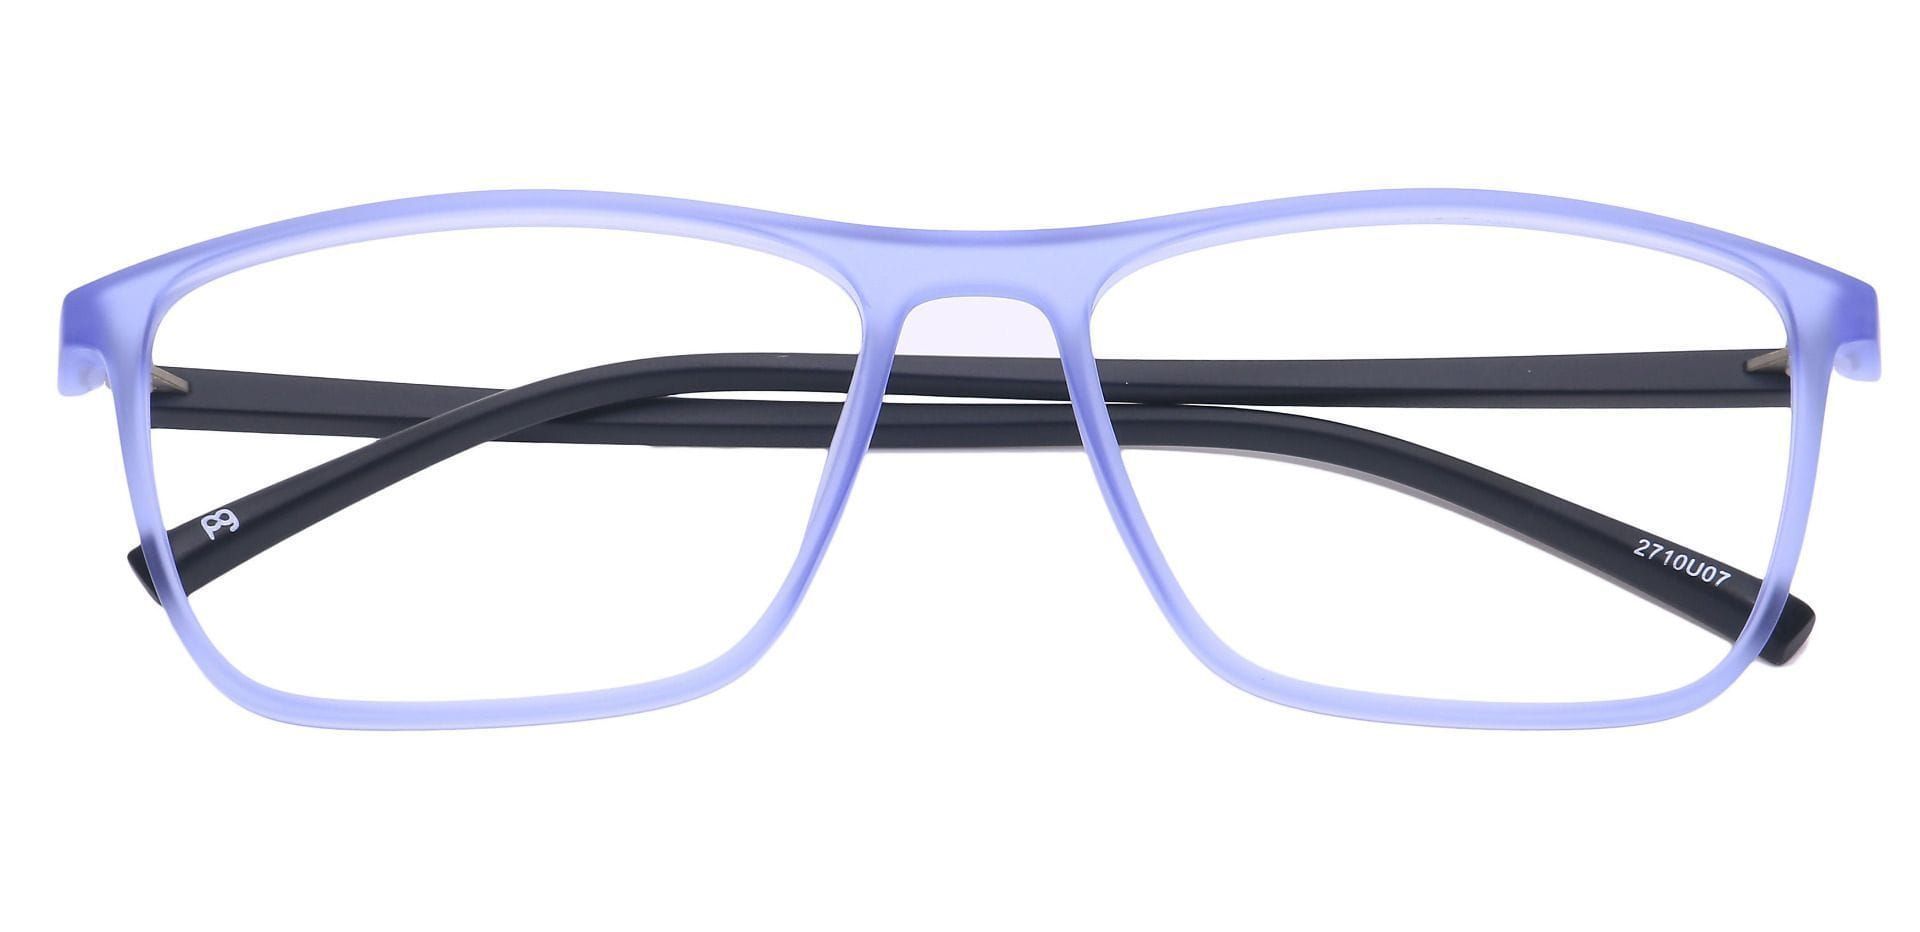 Candid Rectangle Progressive Glasses - Blue